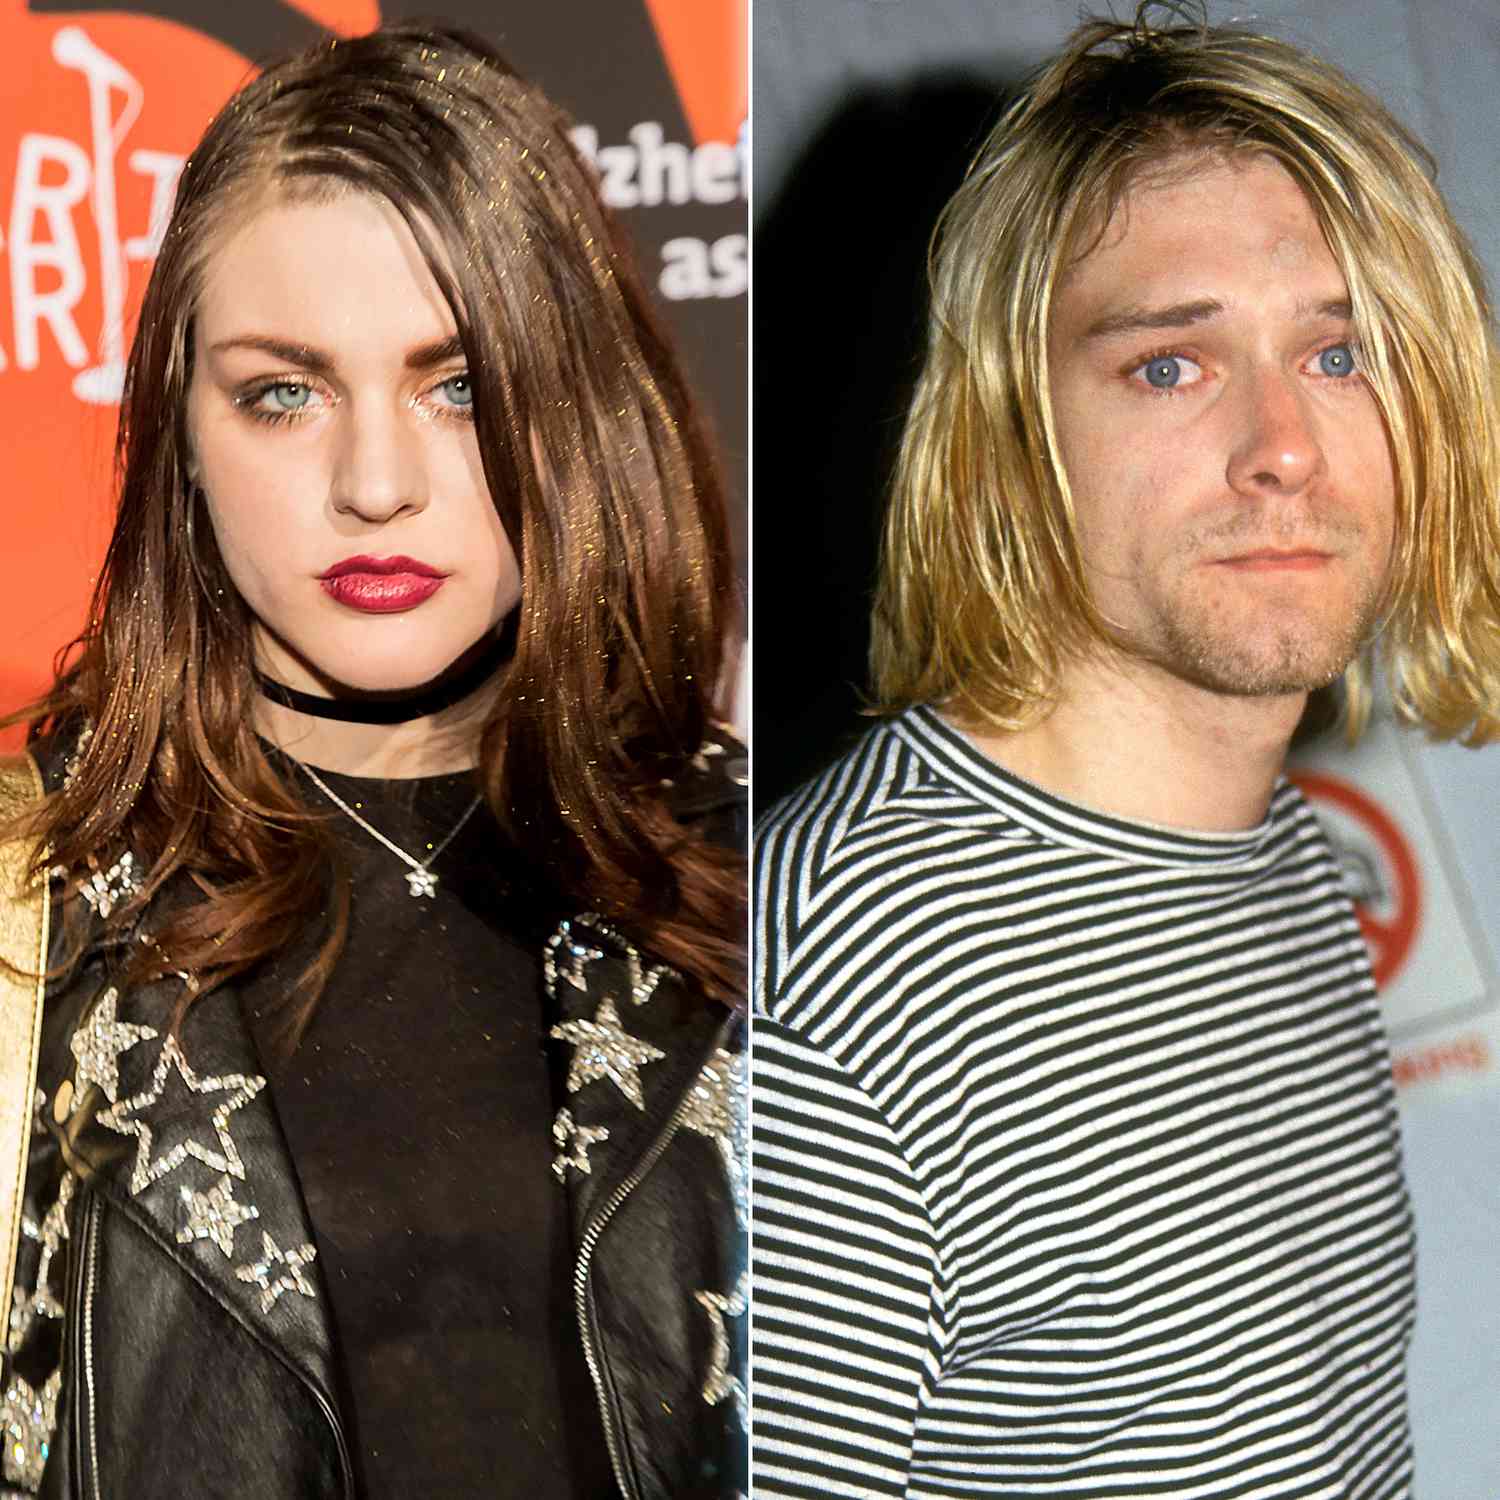 Frances Bean and Kurt Cobain